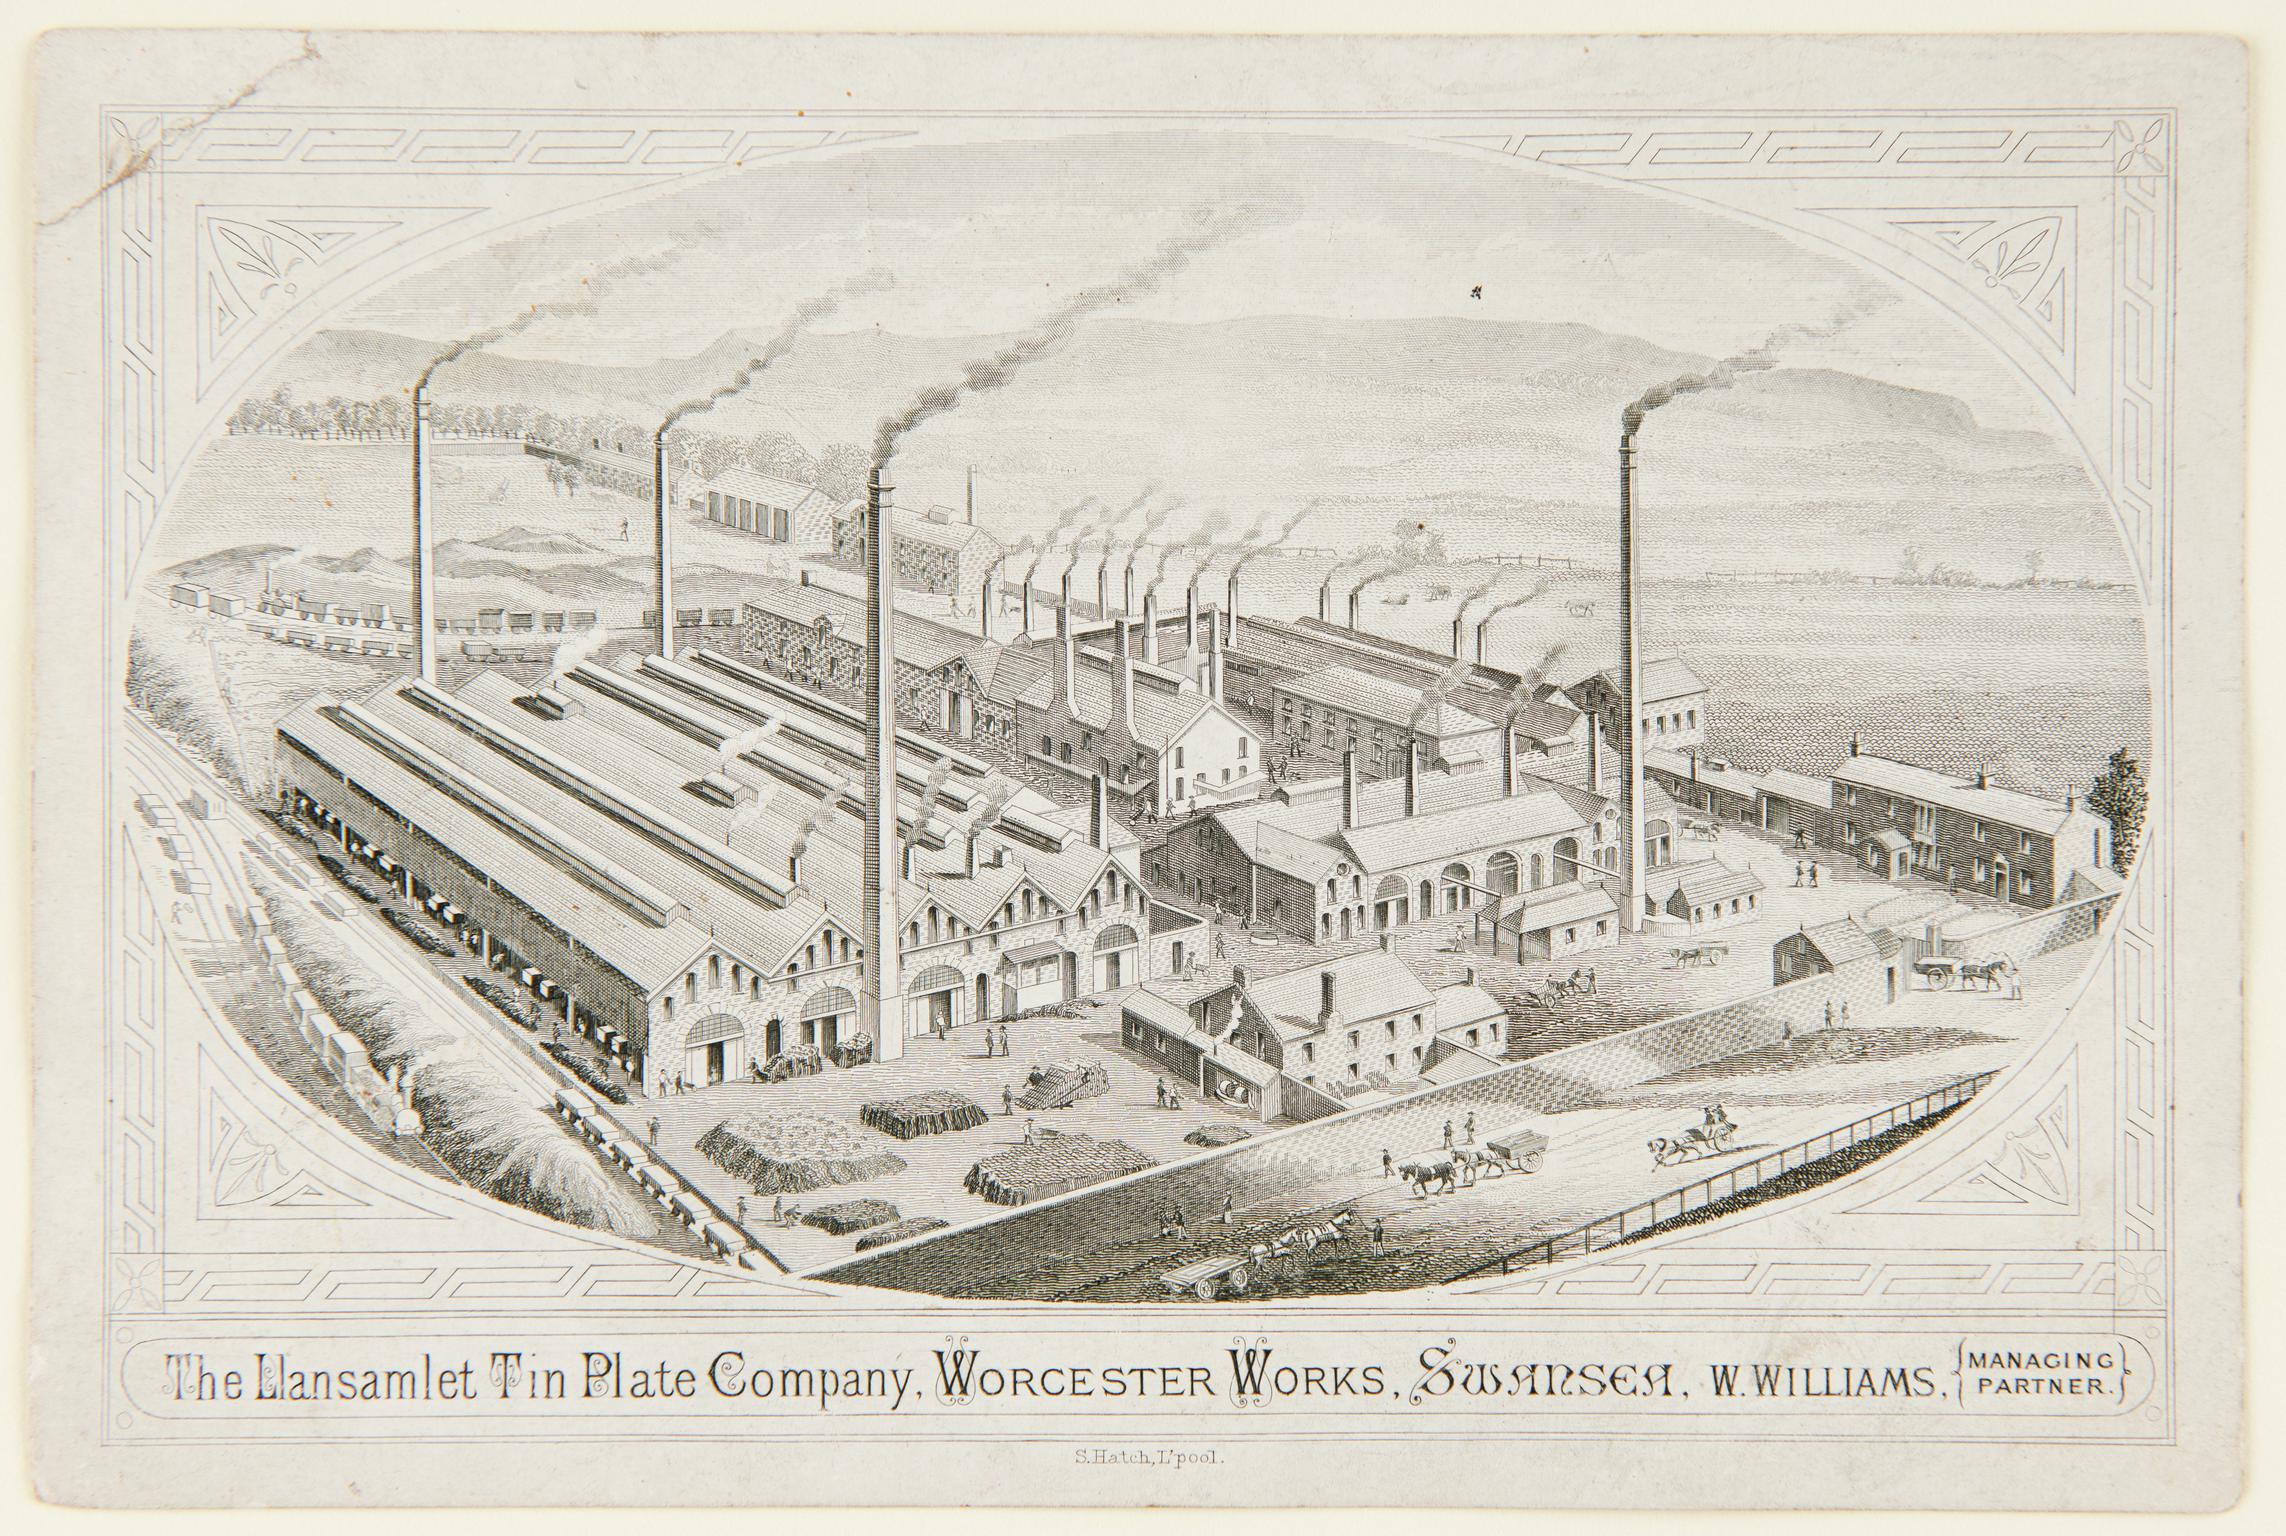 Llansamlet Tin Plate Company, Swansea, print